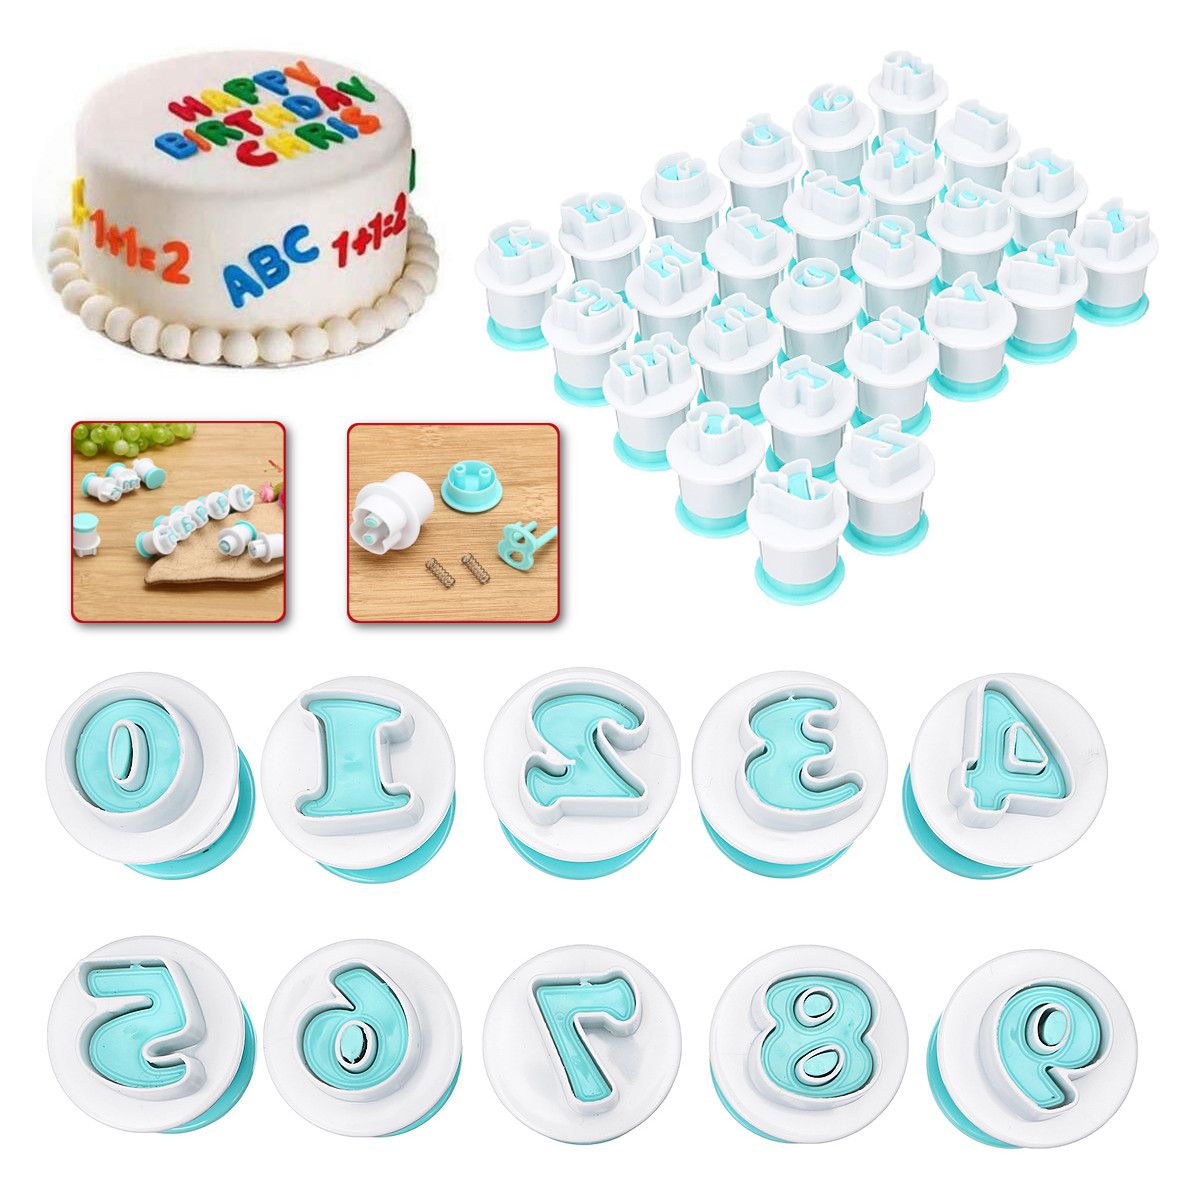 Alphabet-Letter-Number-Fondant-Cake-Cutter-Cookie-Mould-Sugar-Craft-Decorations-1534410